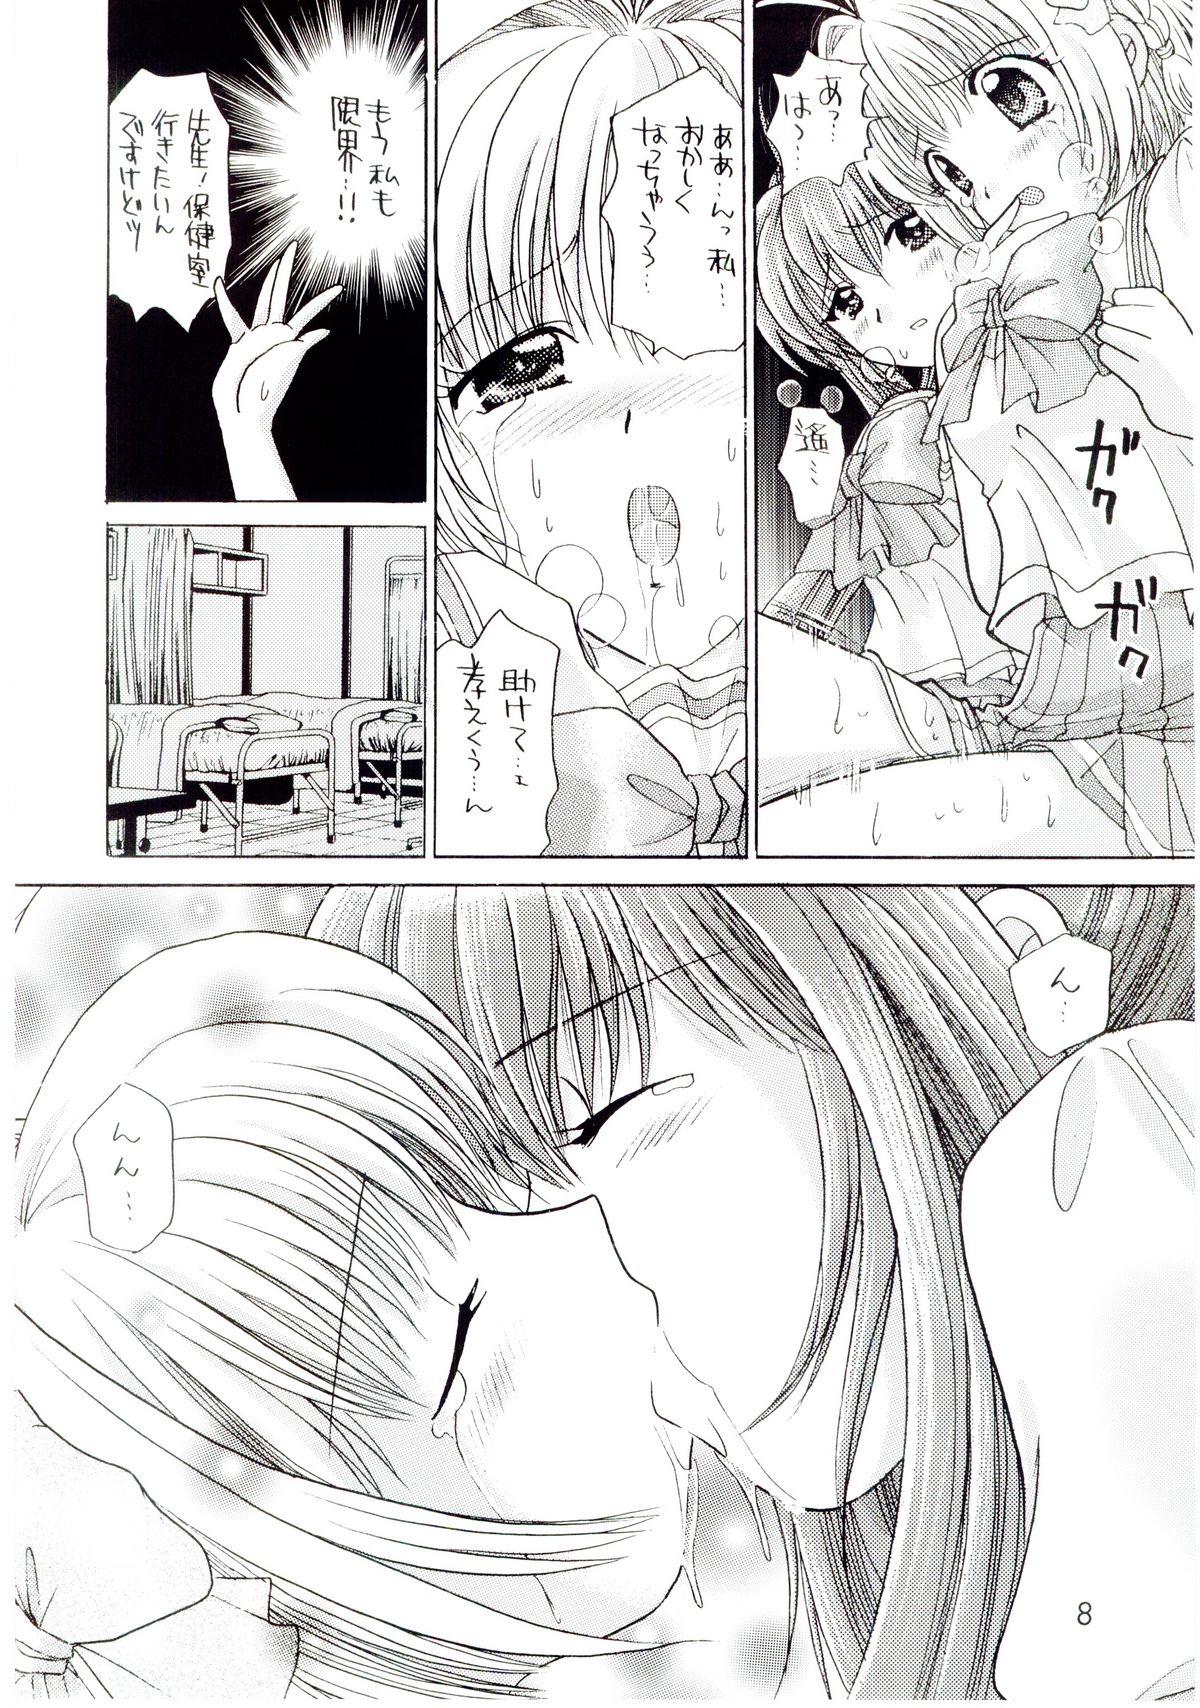 Licking Pussy Kimi ga nozomu eien zettai zetsumei 2 - Kimi ga nozomu eien Village - Page 7